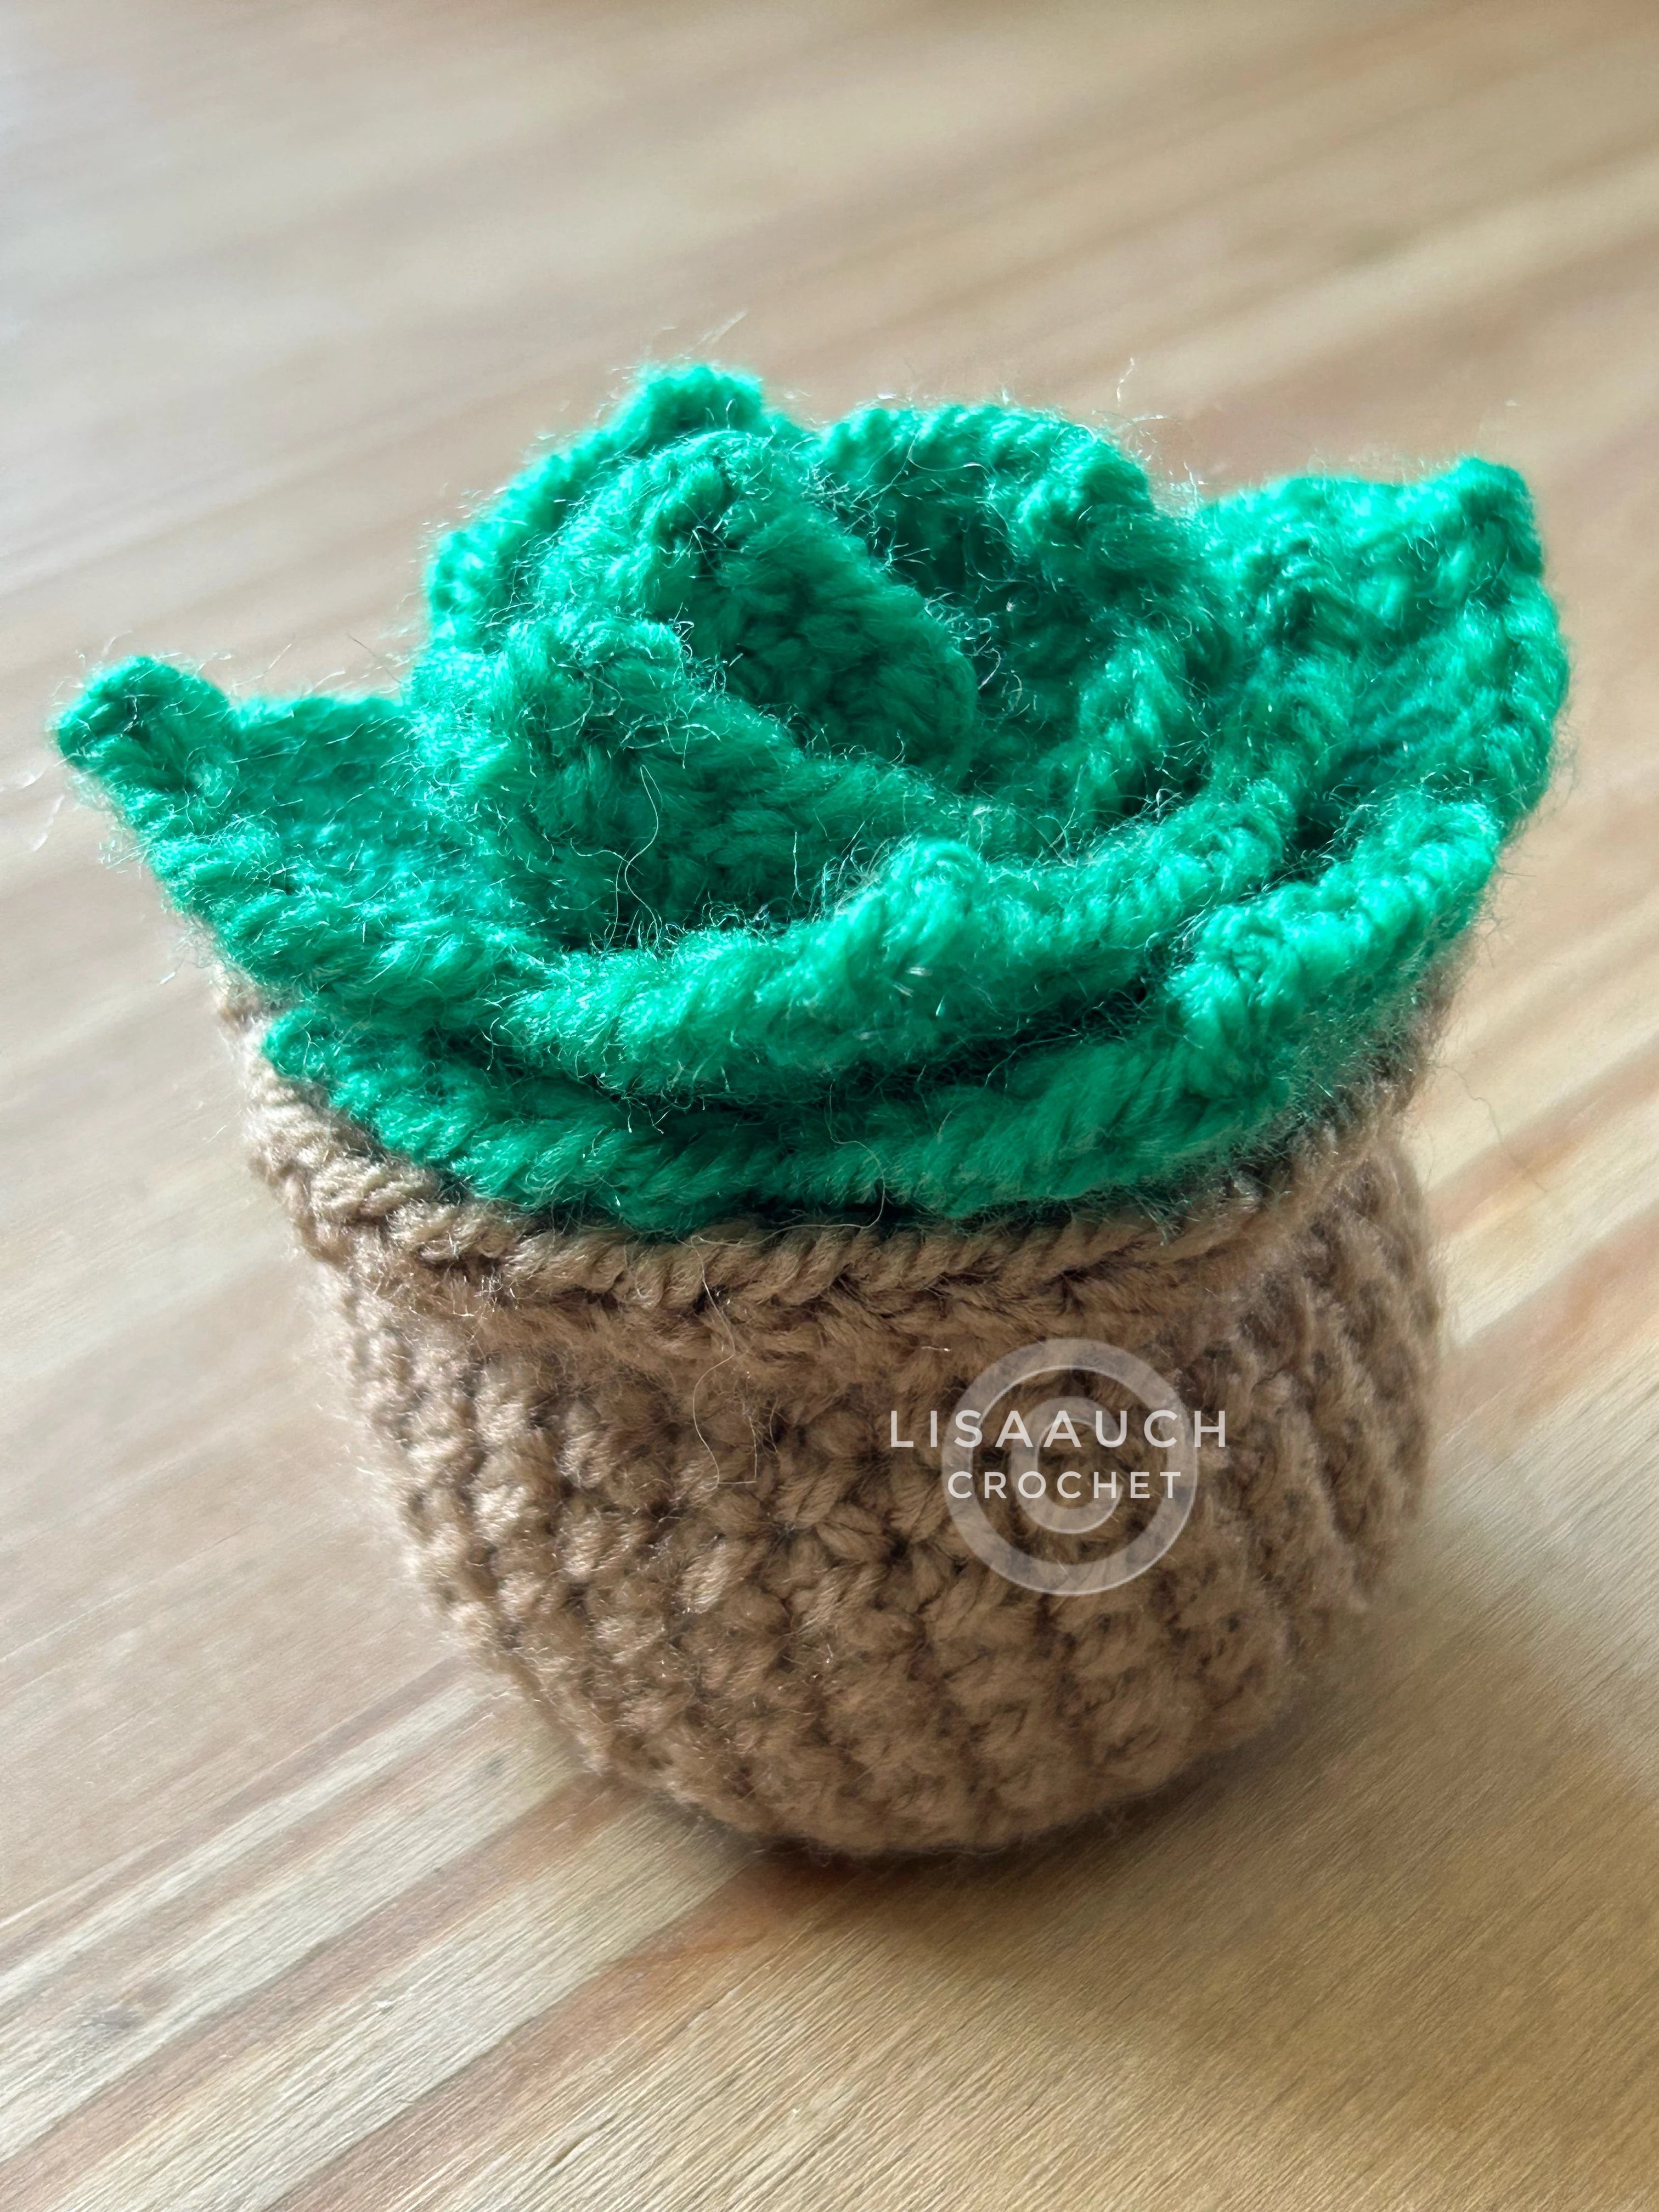 crochet succulent, hanging plants crochet patterns free